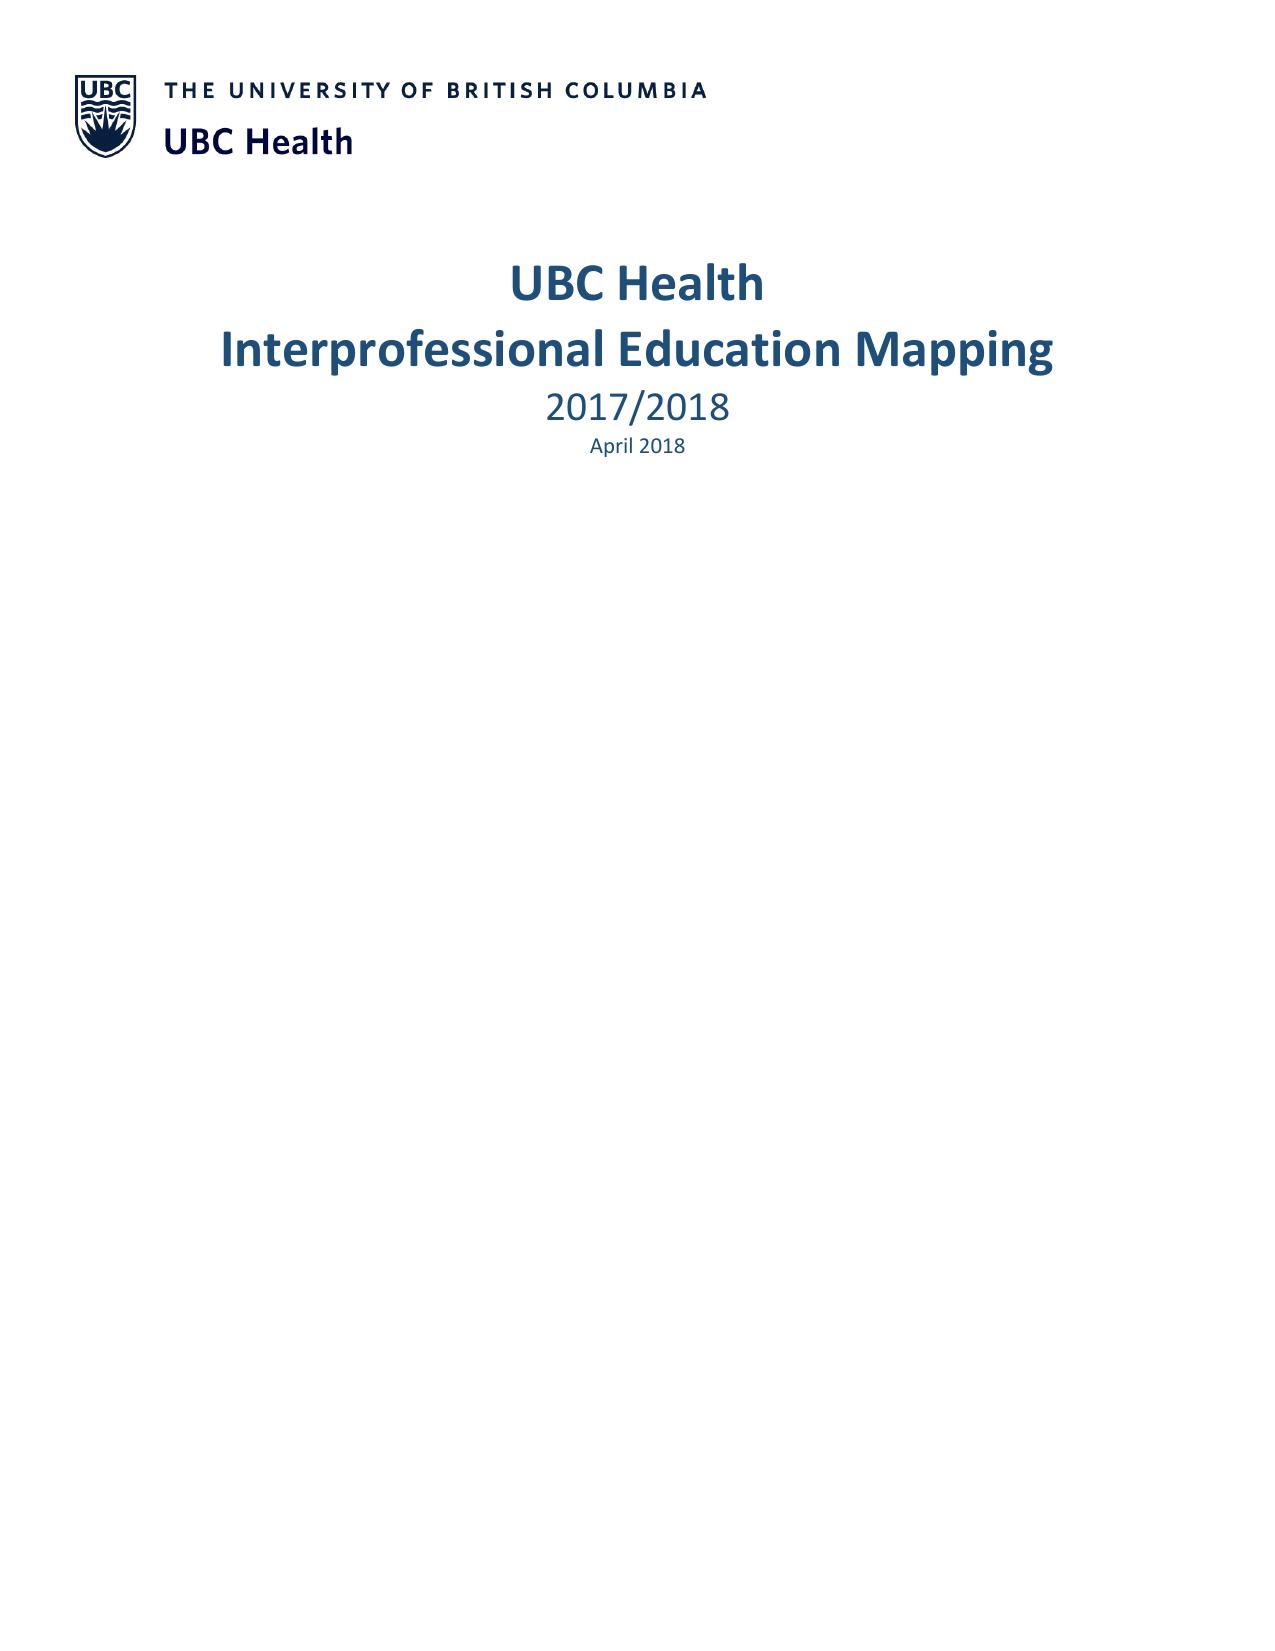 UBC Health Interprofessional Education Mapping 2017